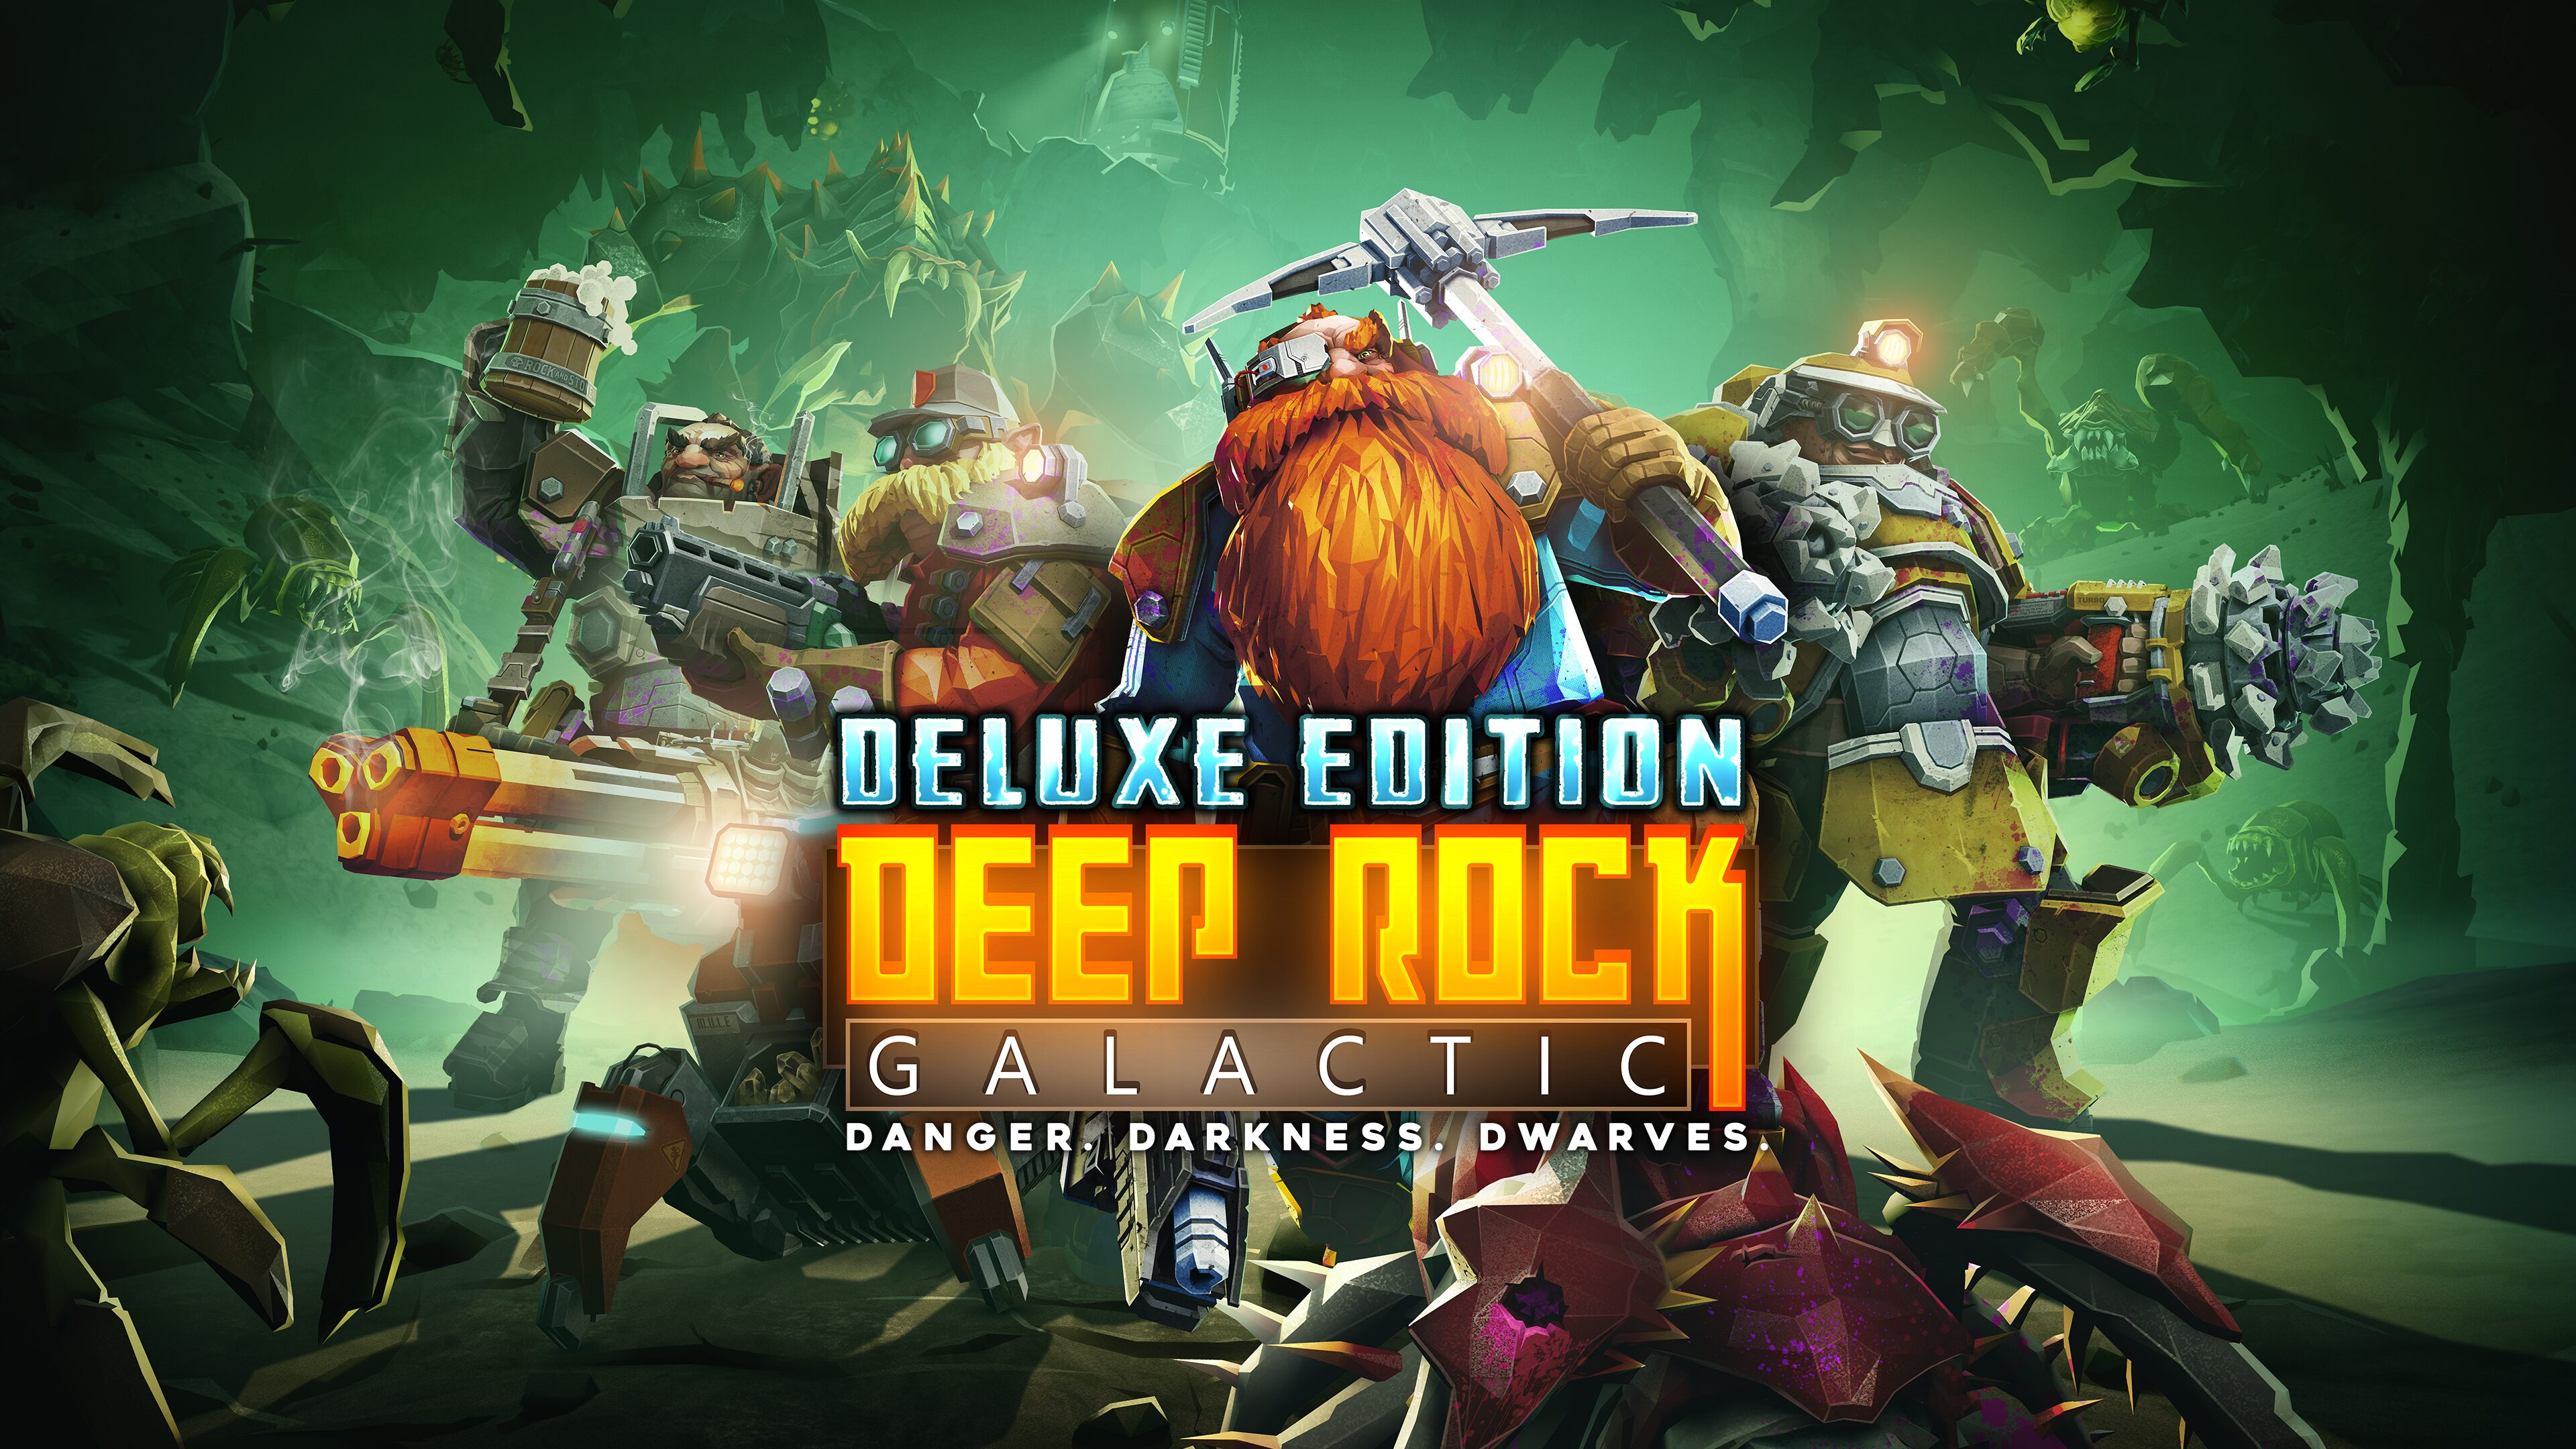 Deep rock galactic games